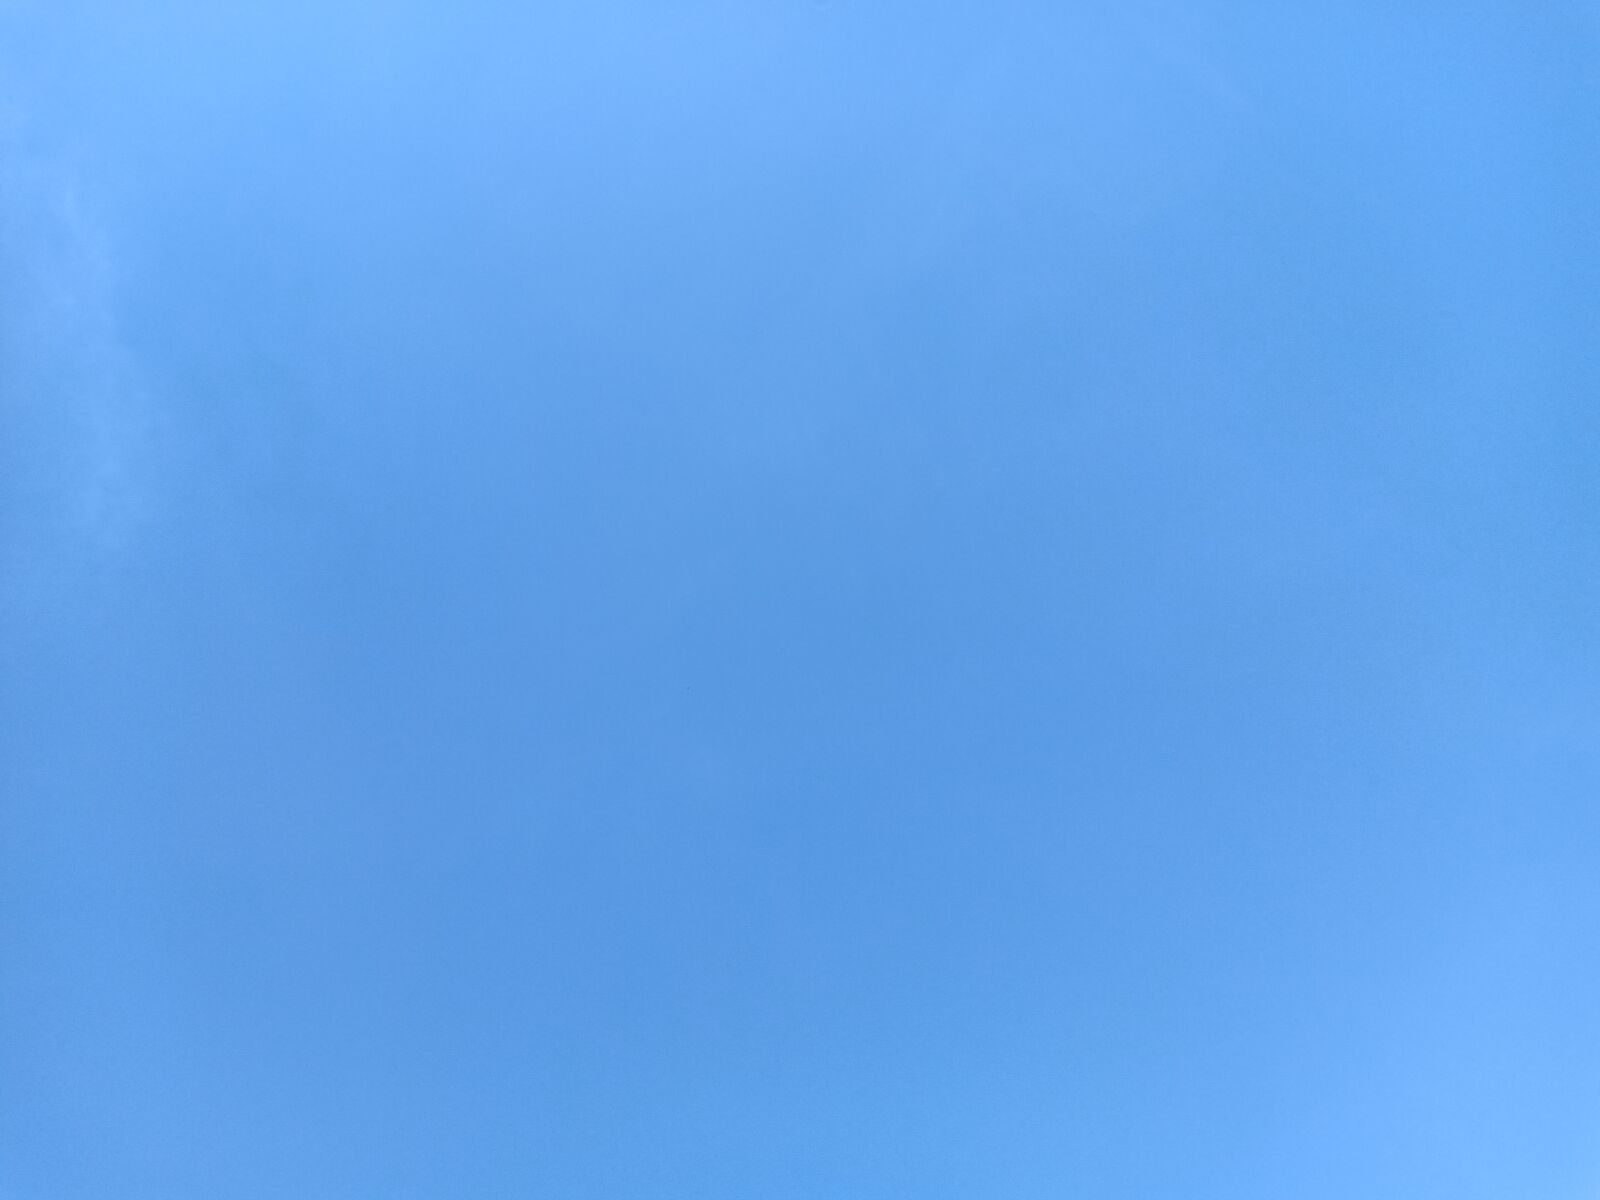 OPPO F7 sample photo. Blue sky, sky, no photography